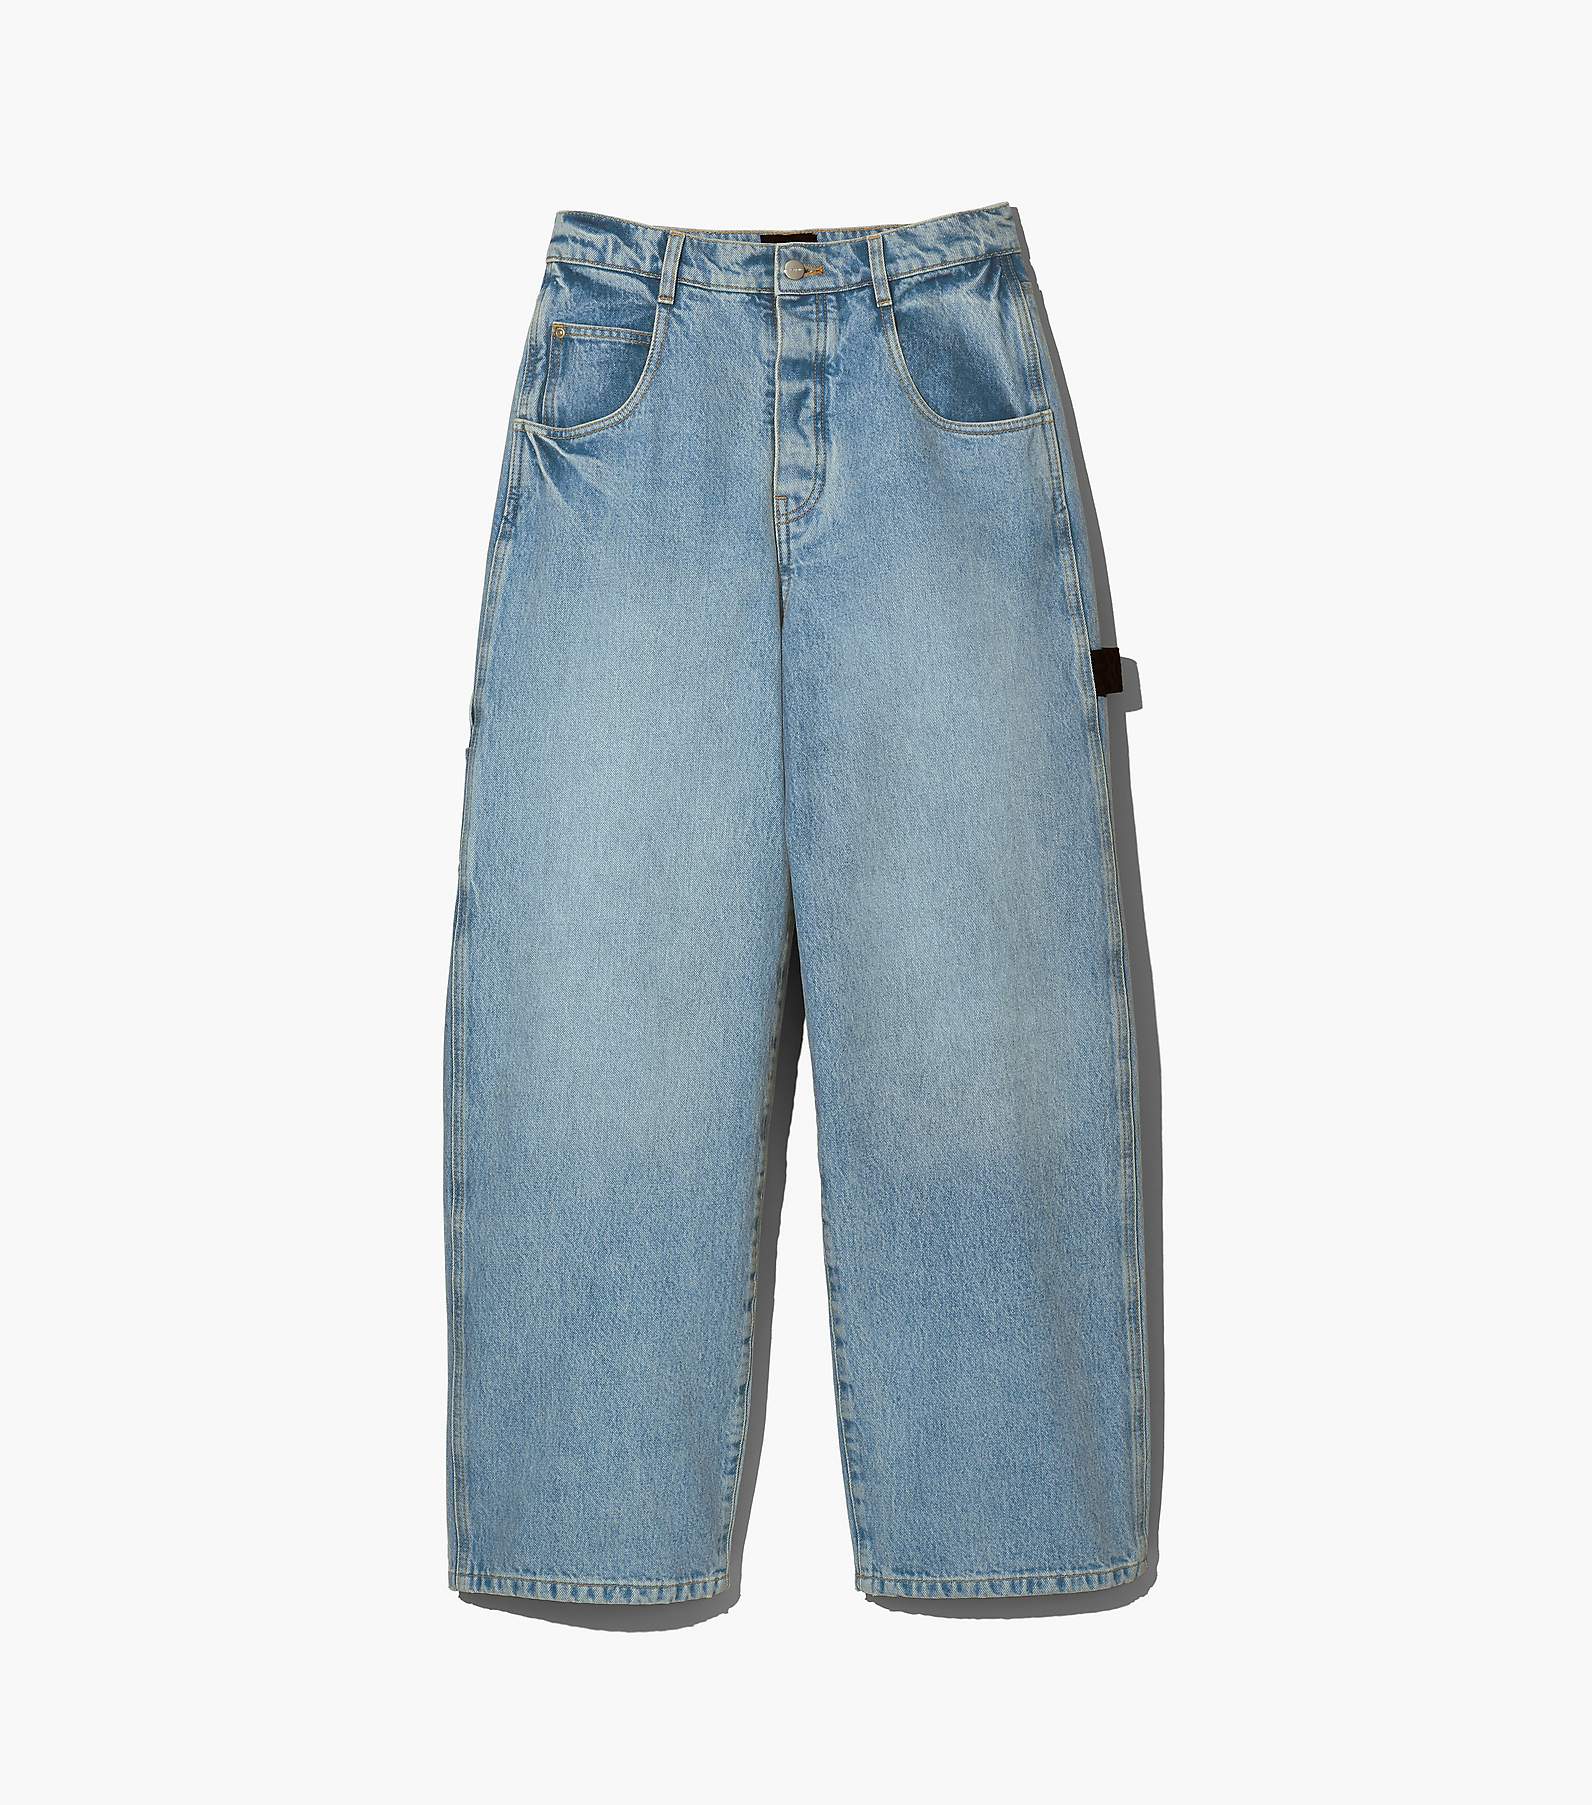 Monogram Jacquard Jeans - Ready to Wear